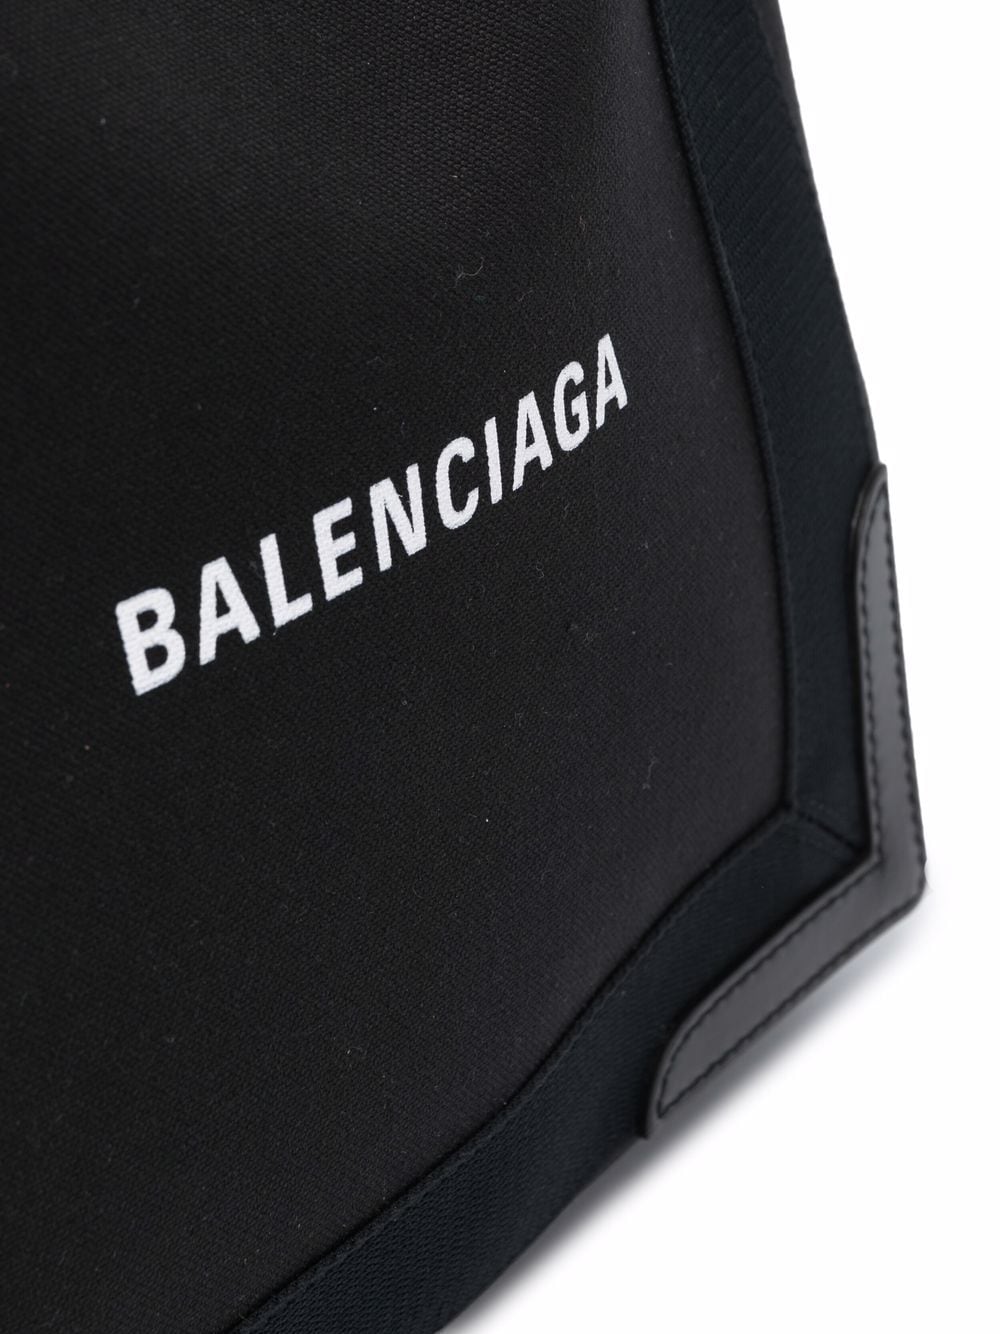 Balenciaga Medium Cabas Tote Bag - Farfetch